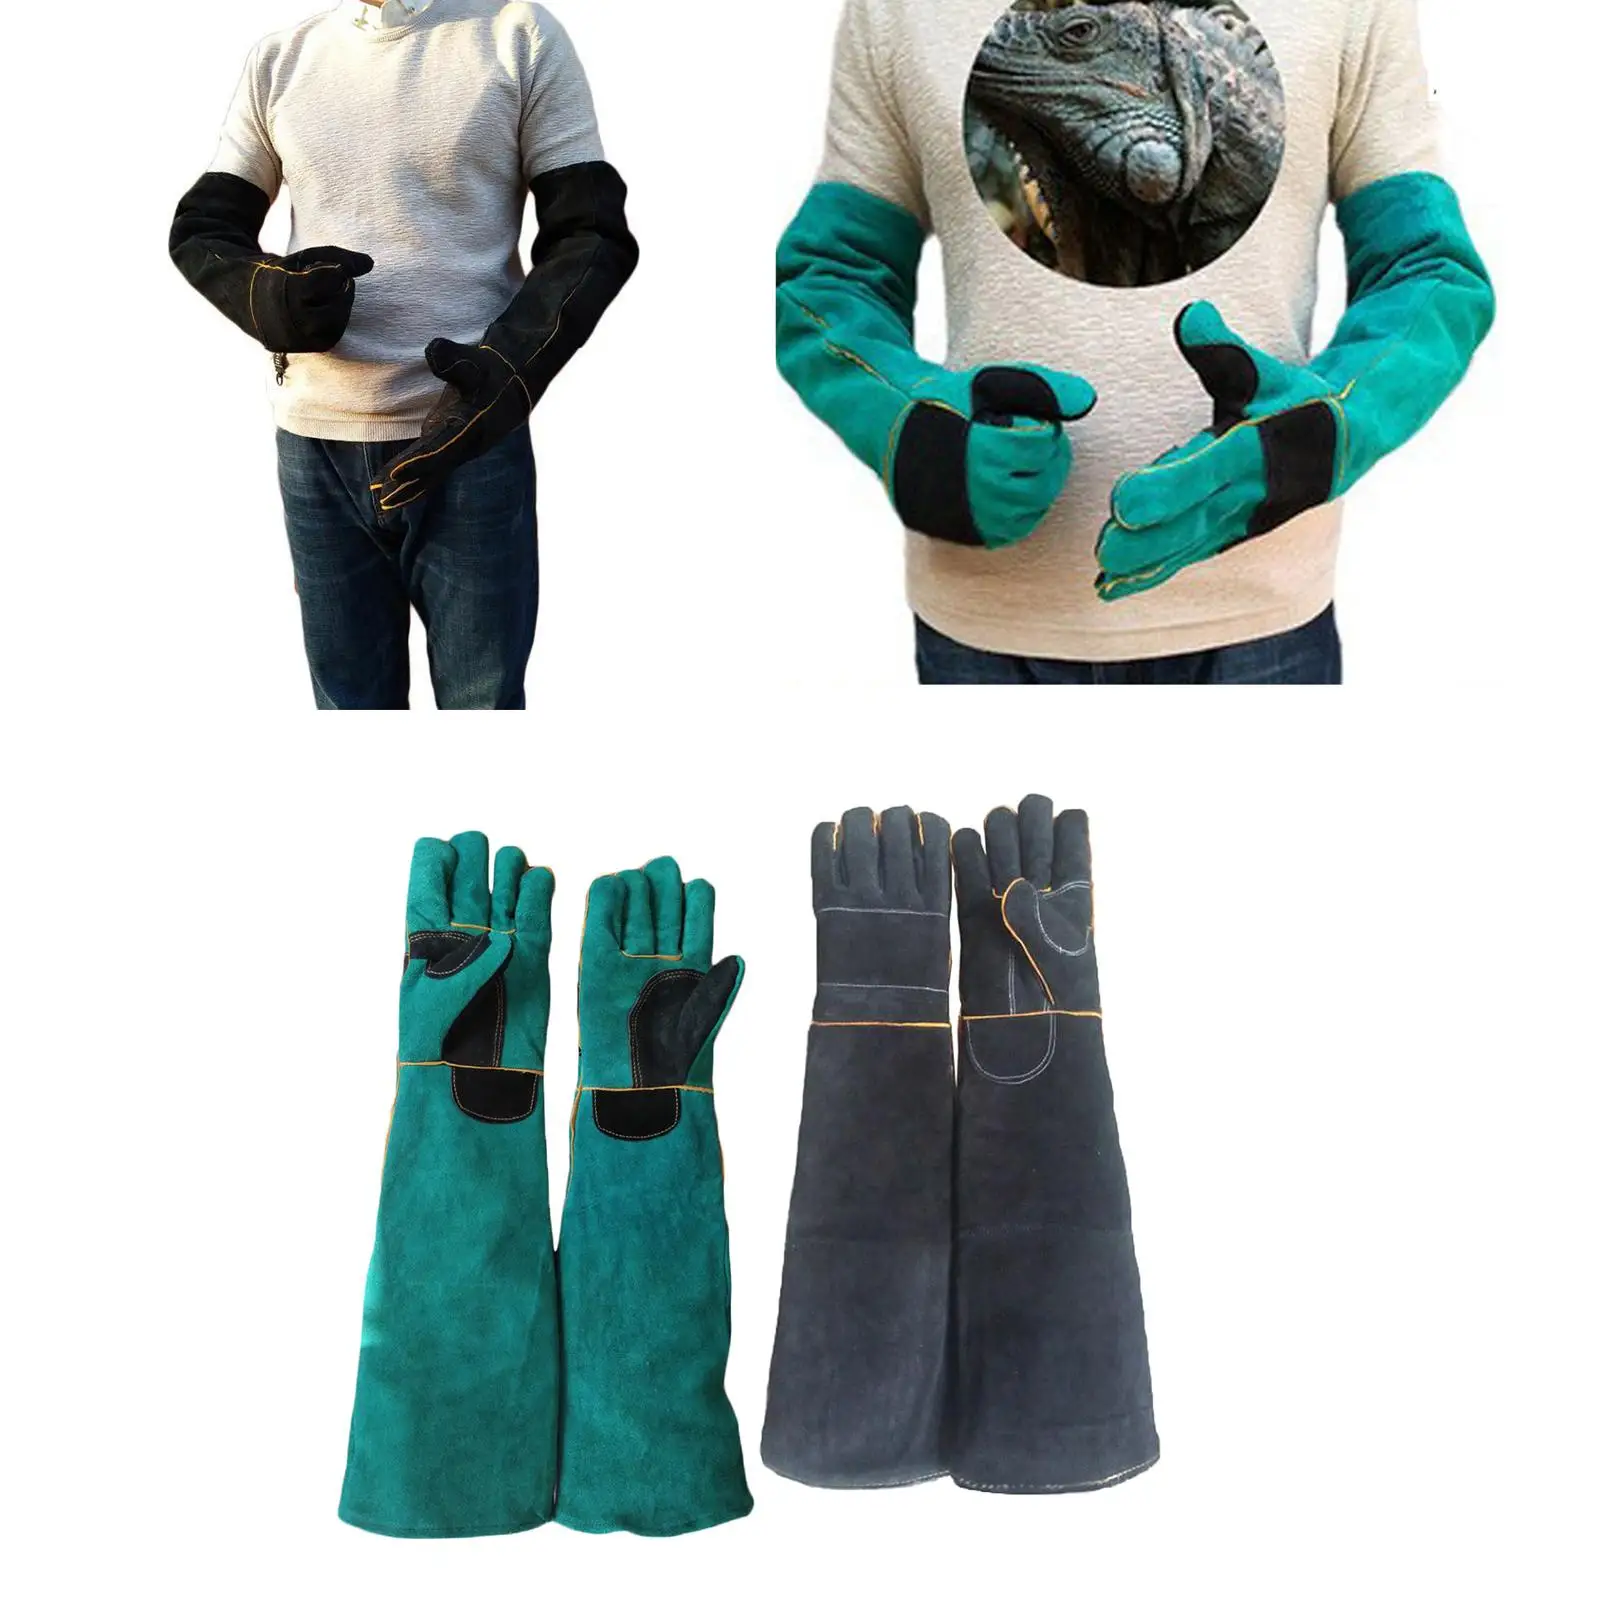 Animal  Gloves  Thickened Cowhide for Welding, Gardening, Handling